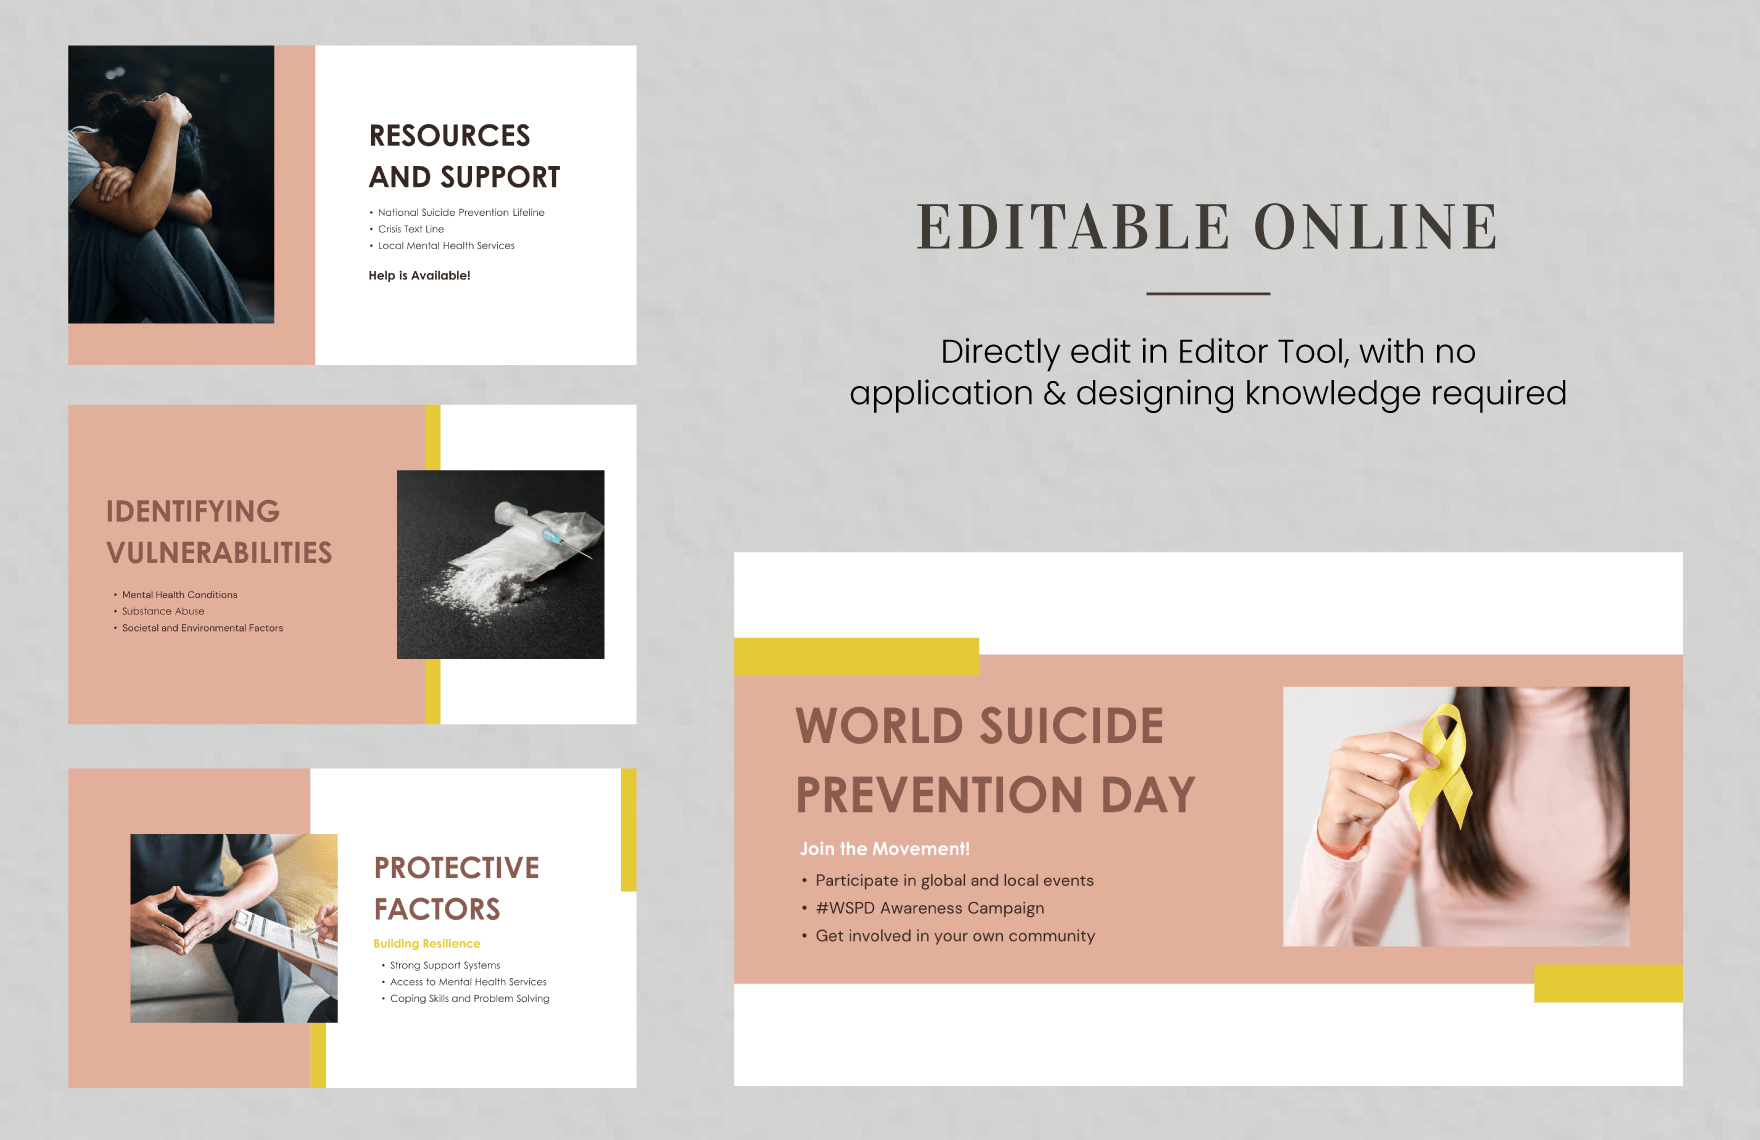 World Suicide Prevention Day Presentation Template